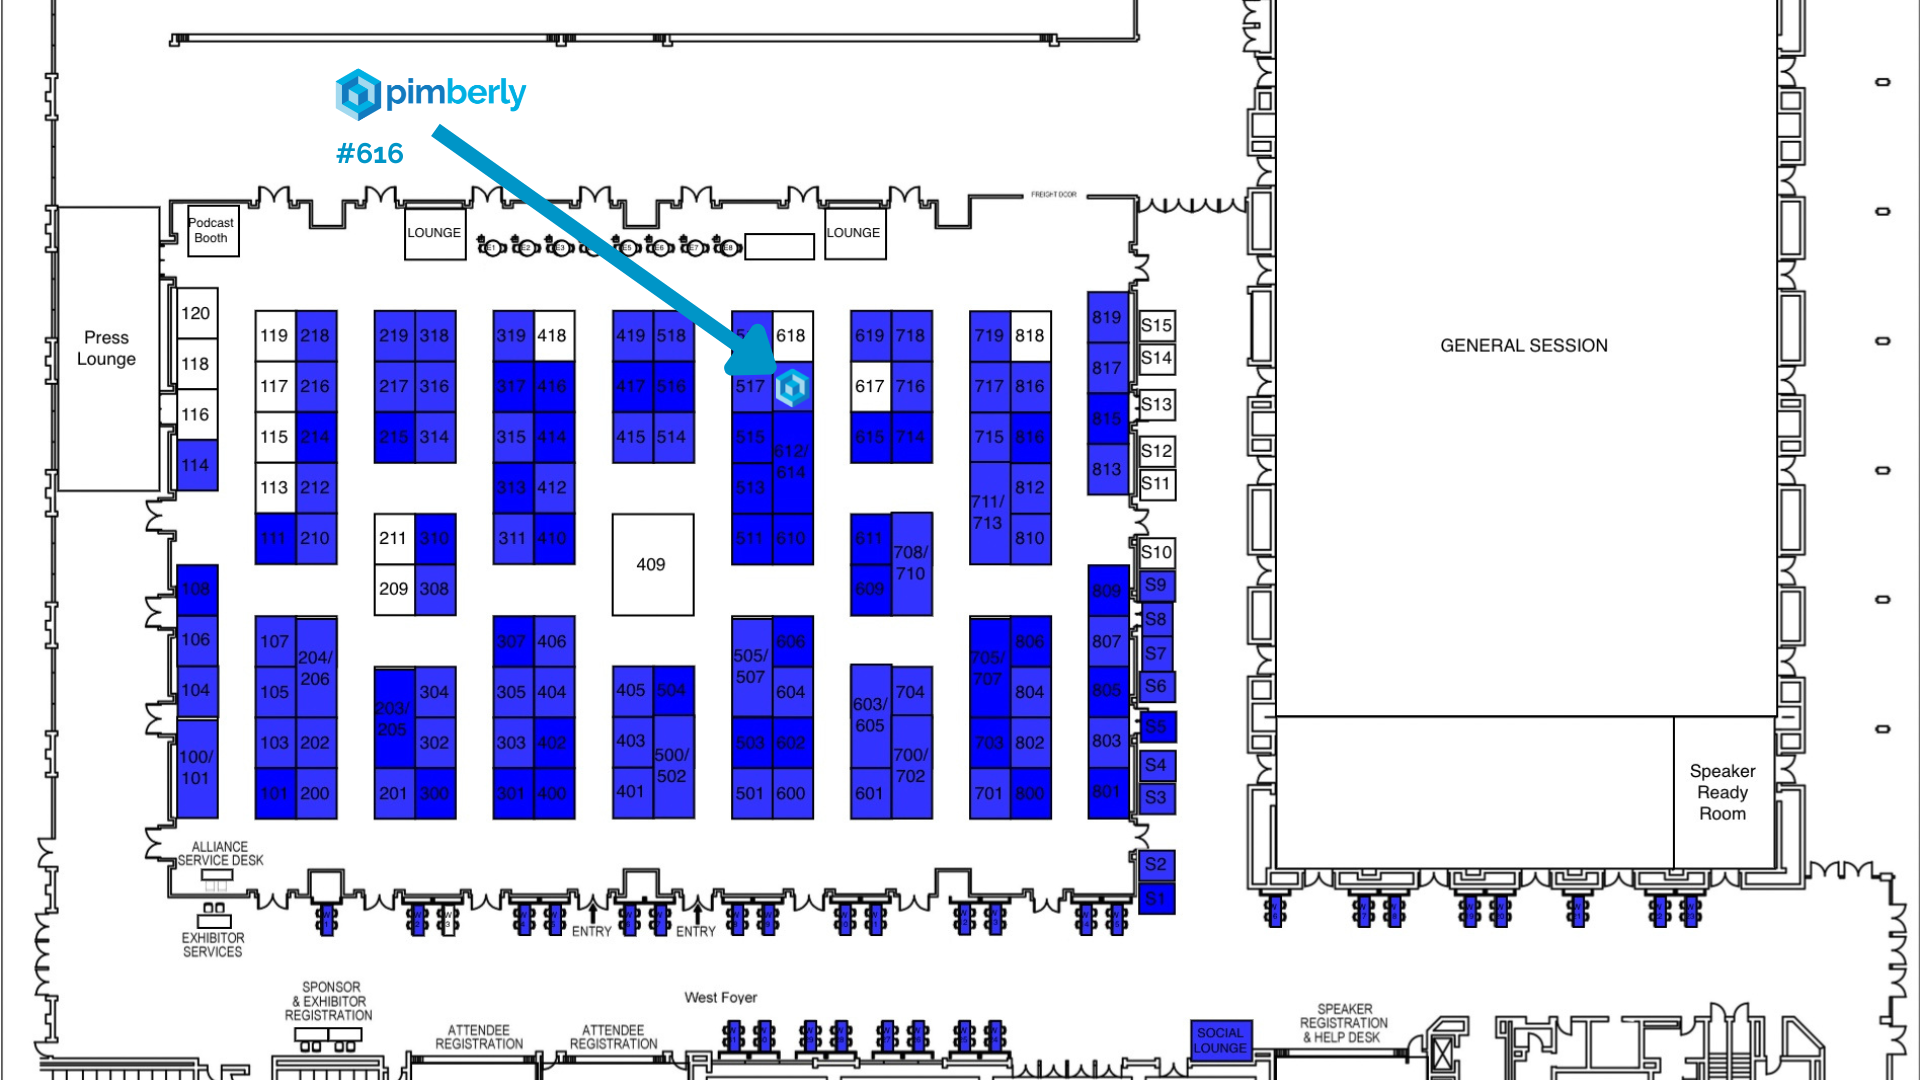 eTail Palm Springs exhibitor floor plan